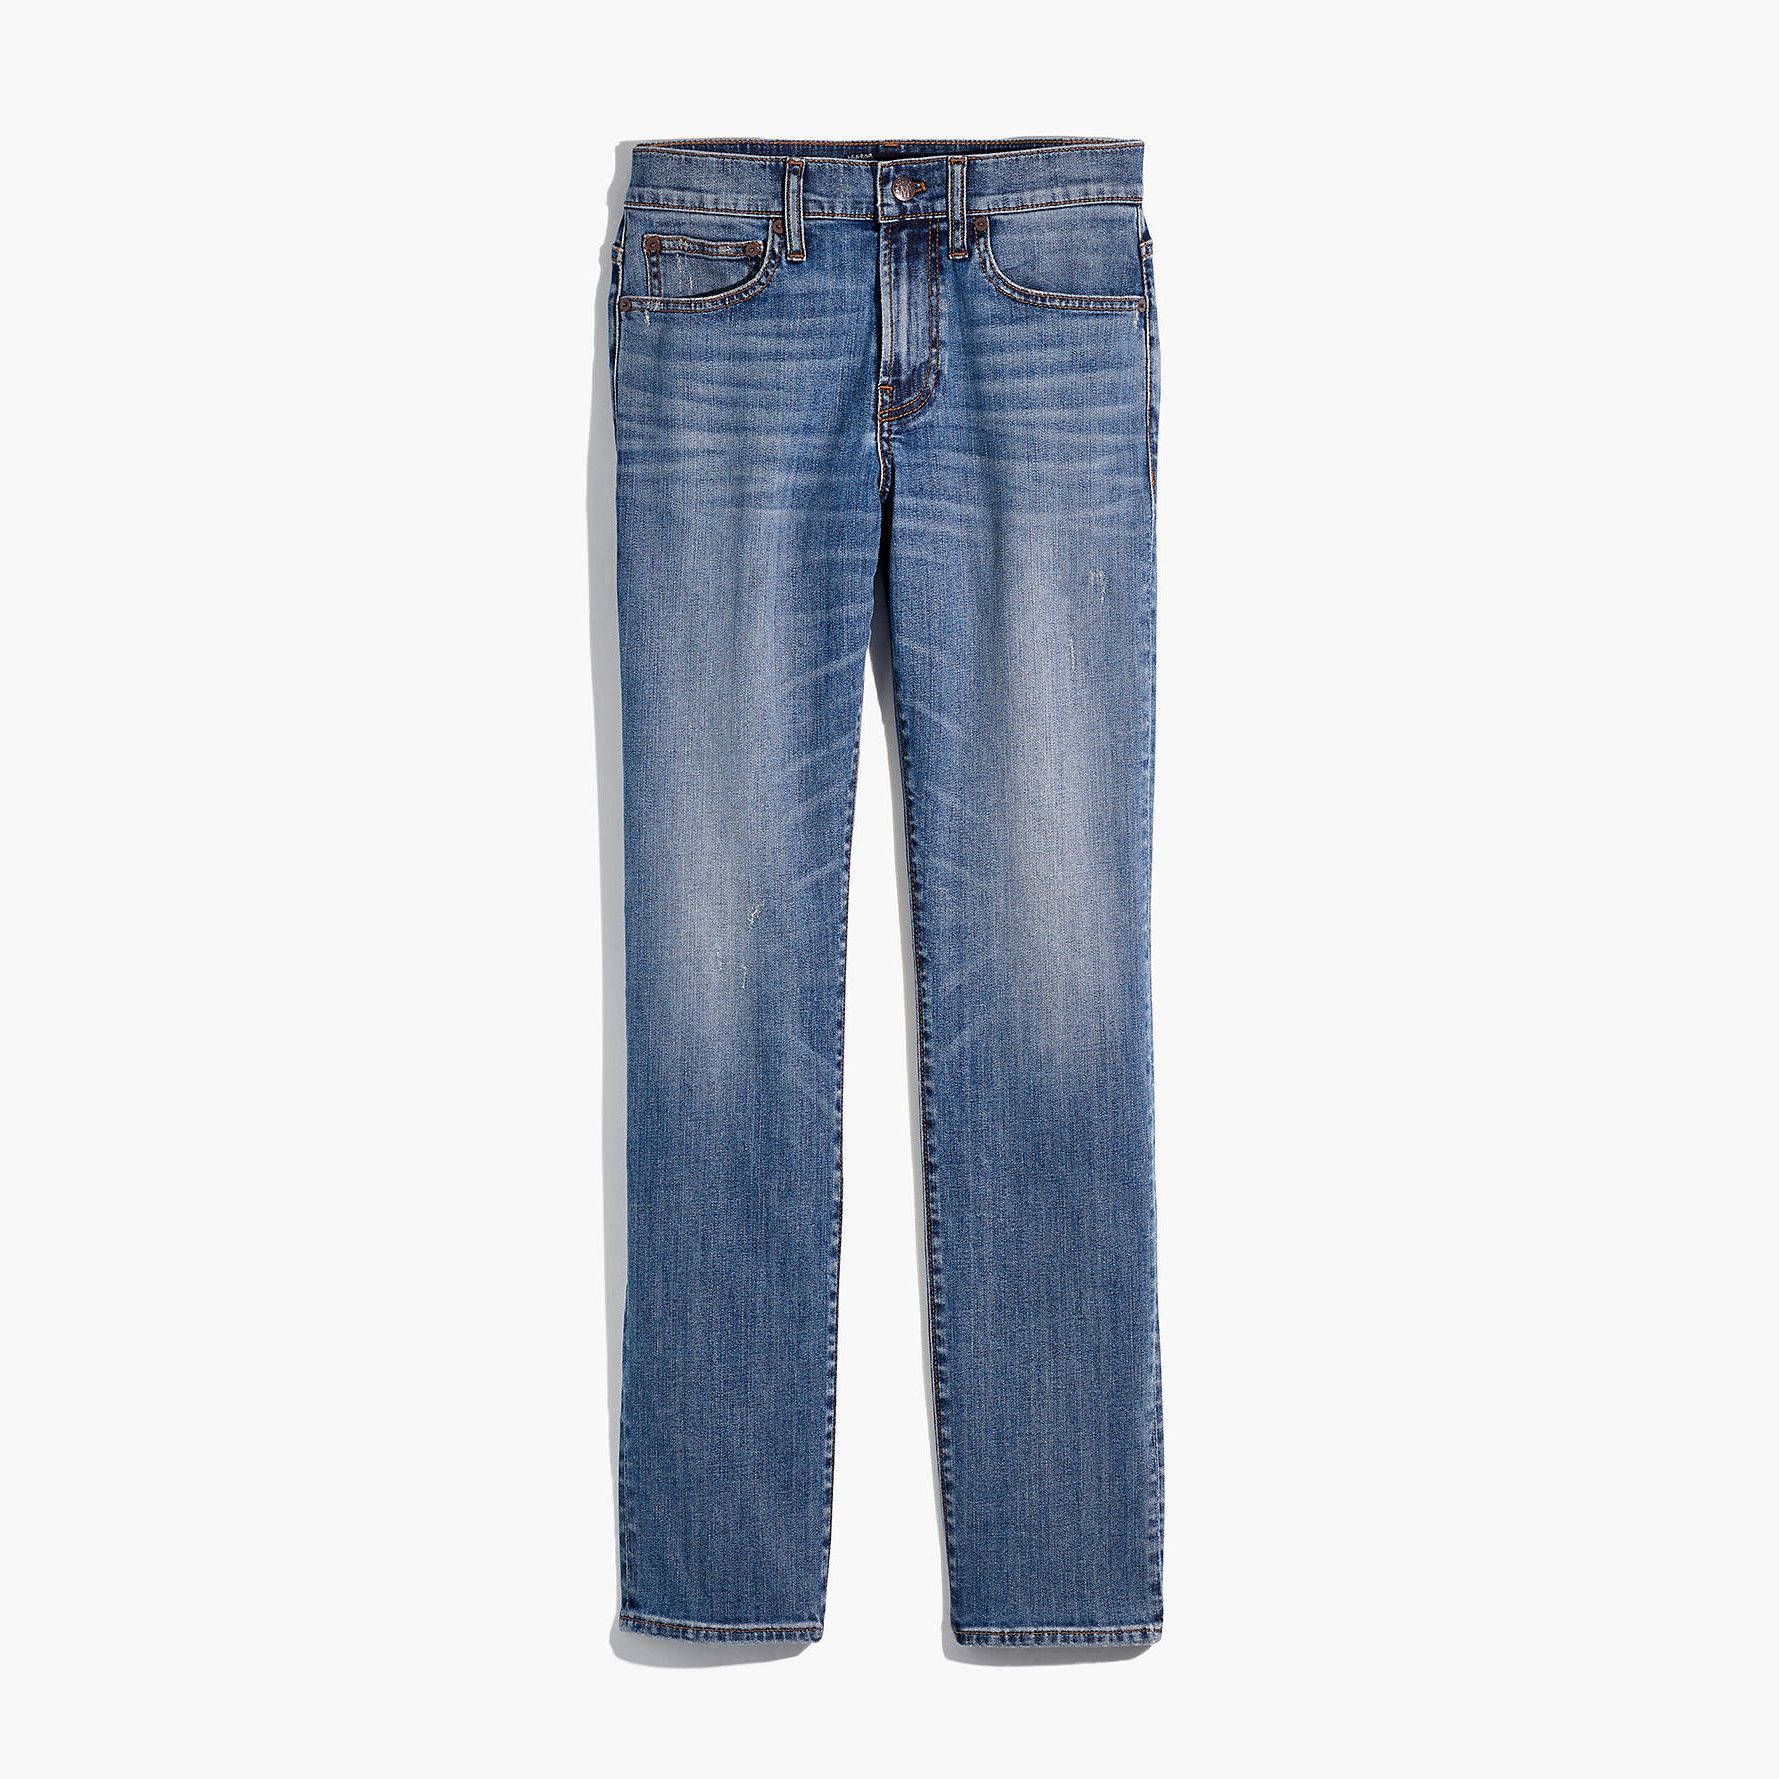 madewell jeans shrink